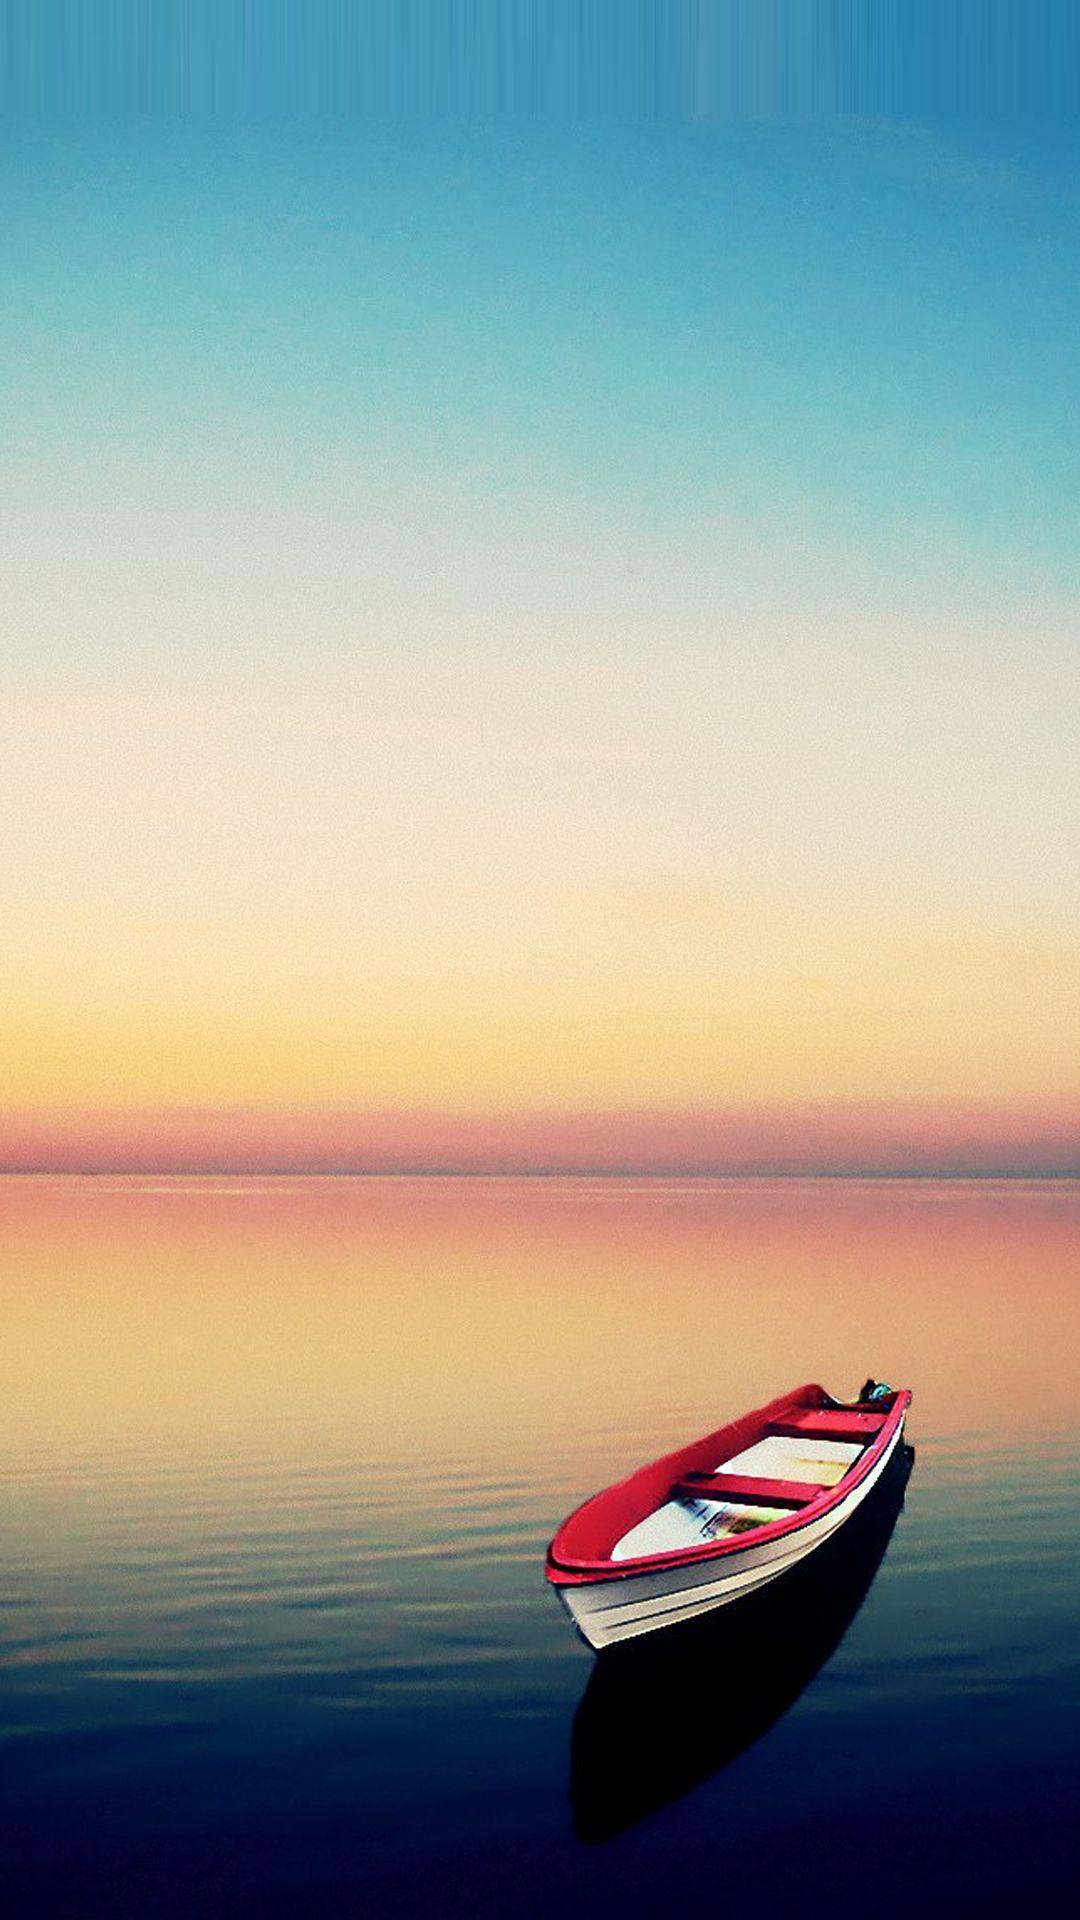 Boat at Sunset Smartphone HD Wallpaper .com